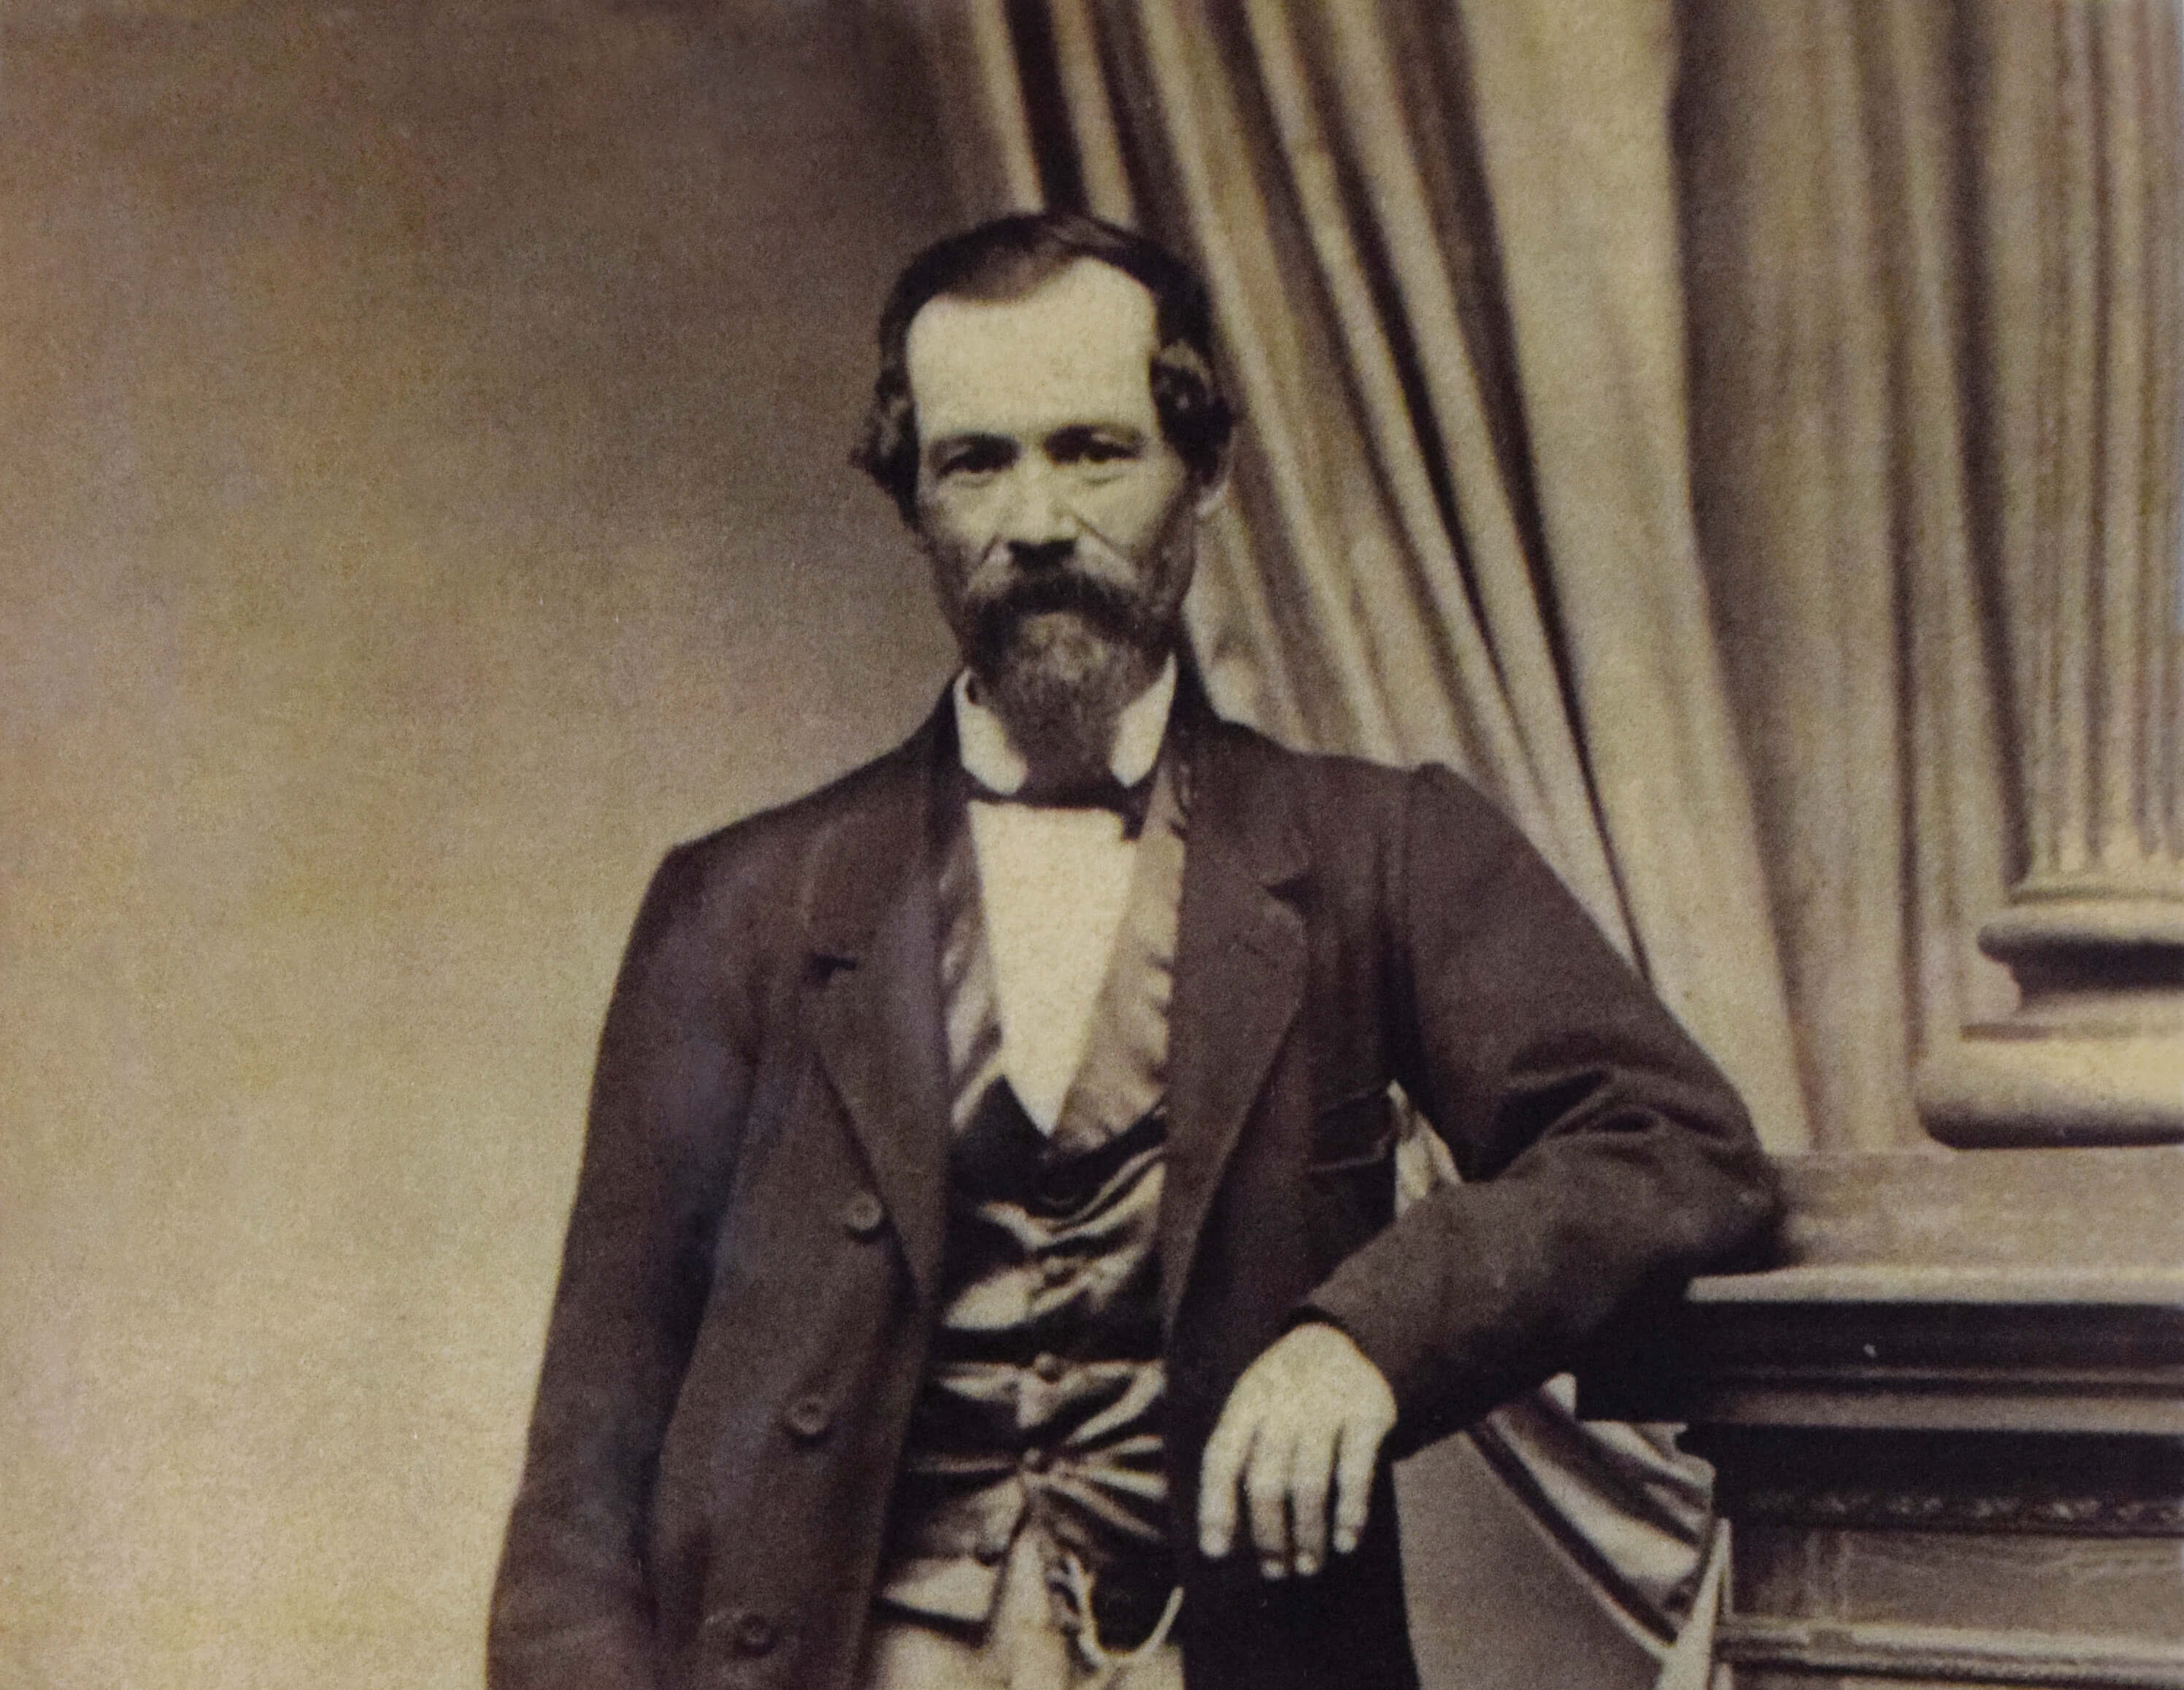 Portrét zámeckého zahradníka Františka Jossta, historická fotografie